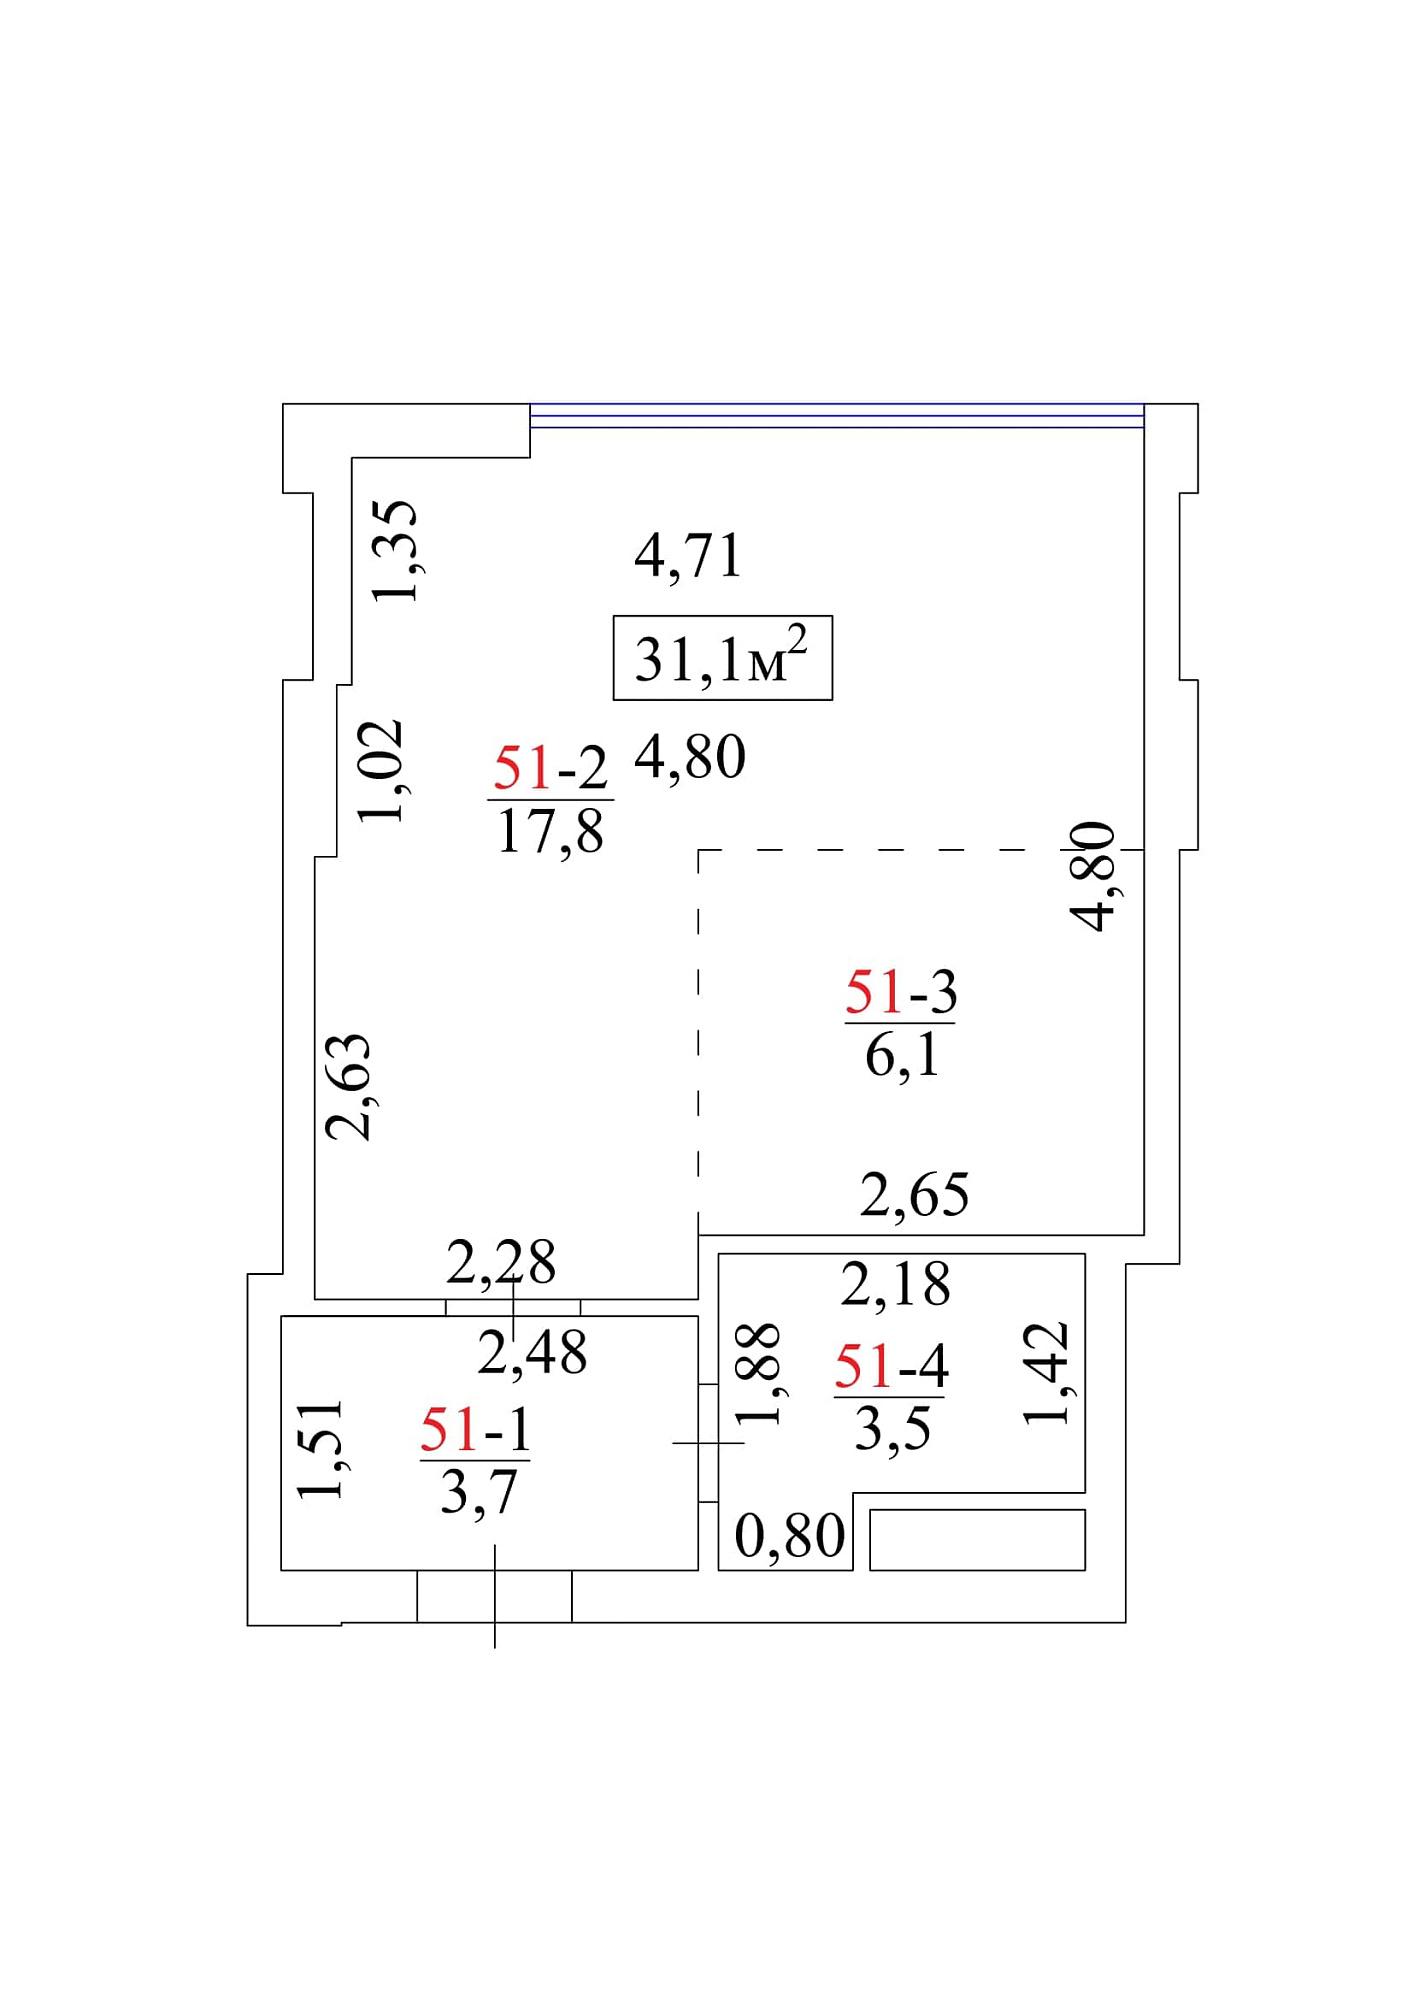 Planning Smart flats area 31.1m2, AB-01-06/00049.